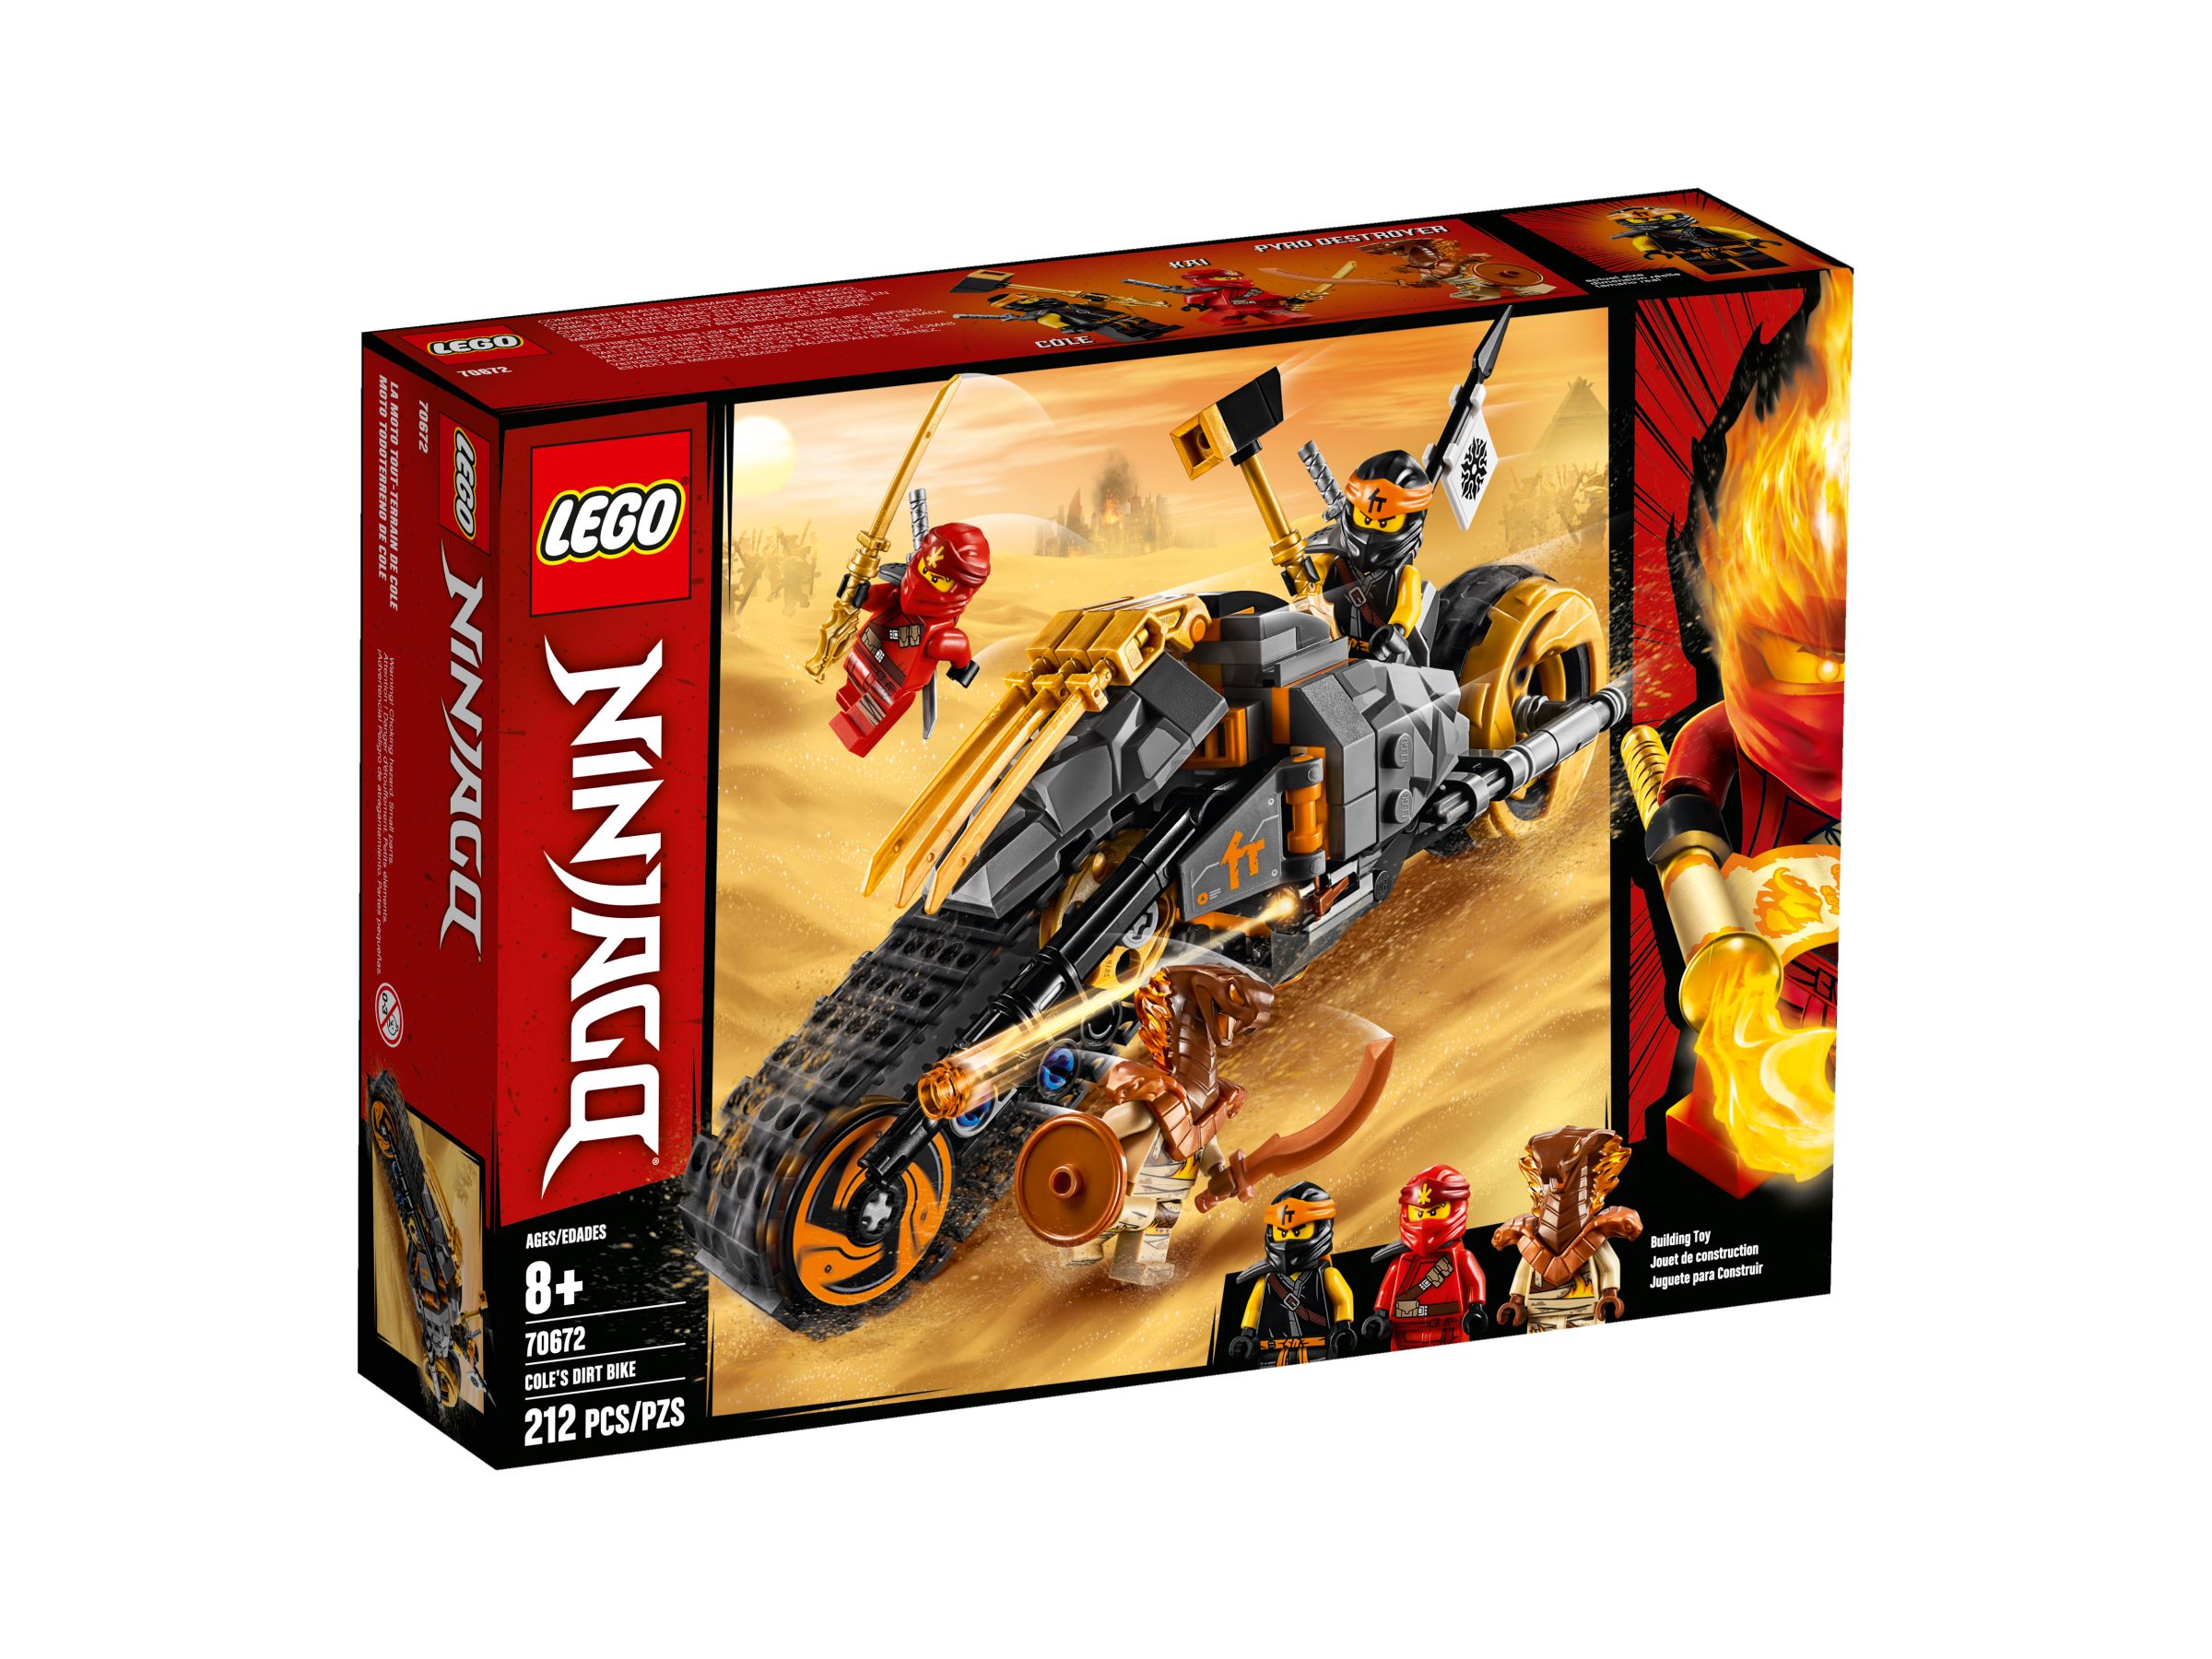 LEGO Ninjago 70672 Coles Offroad-Bike LEGO_70672_alt1.jpg